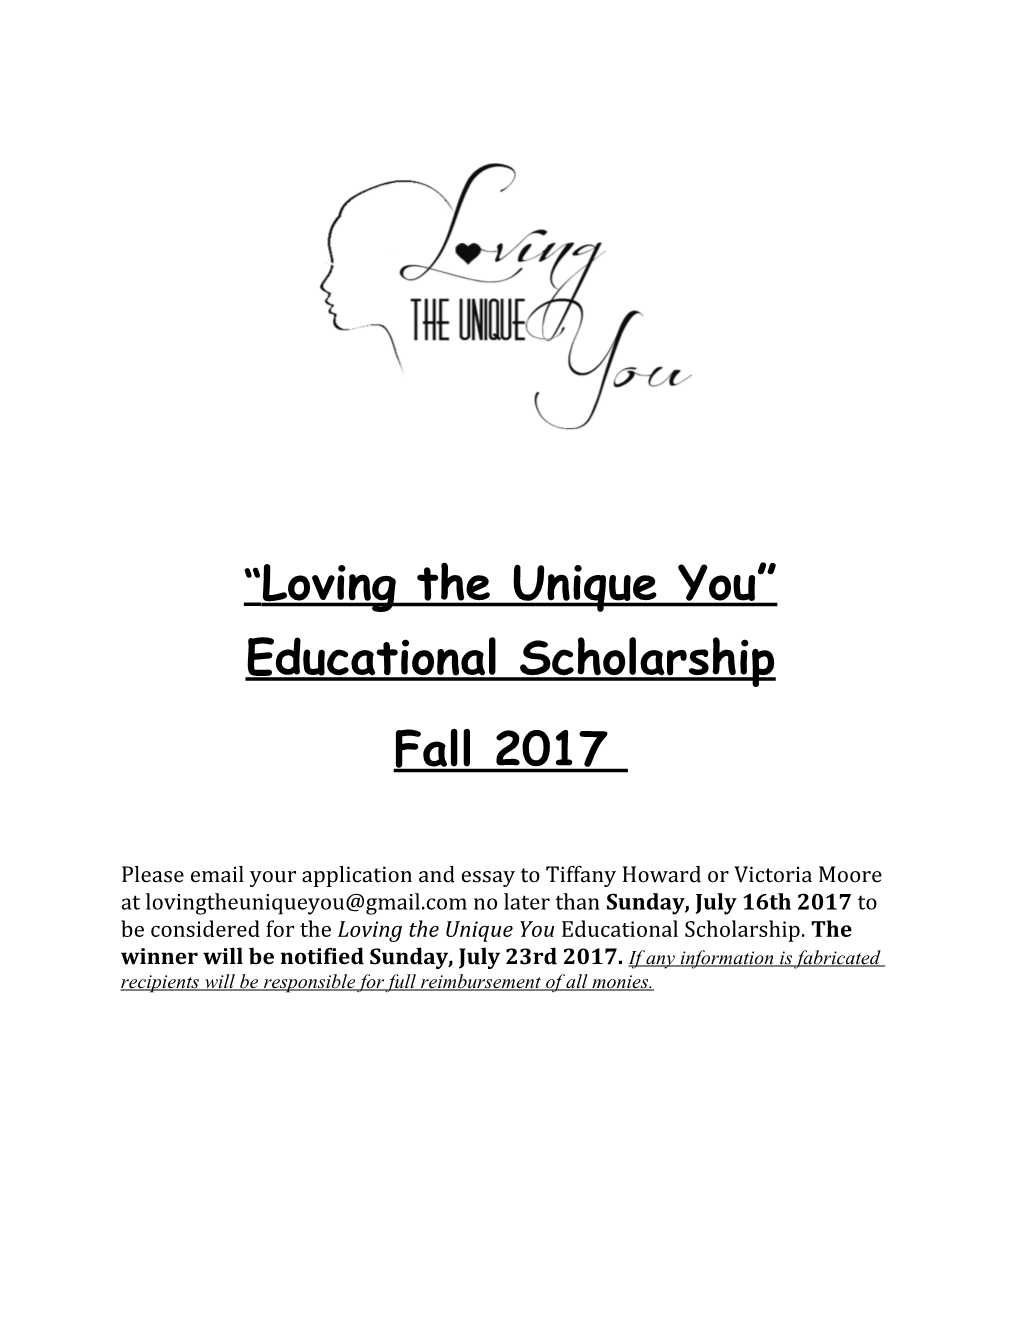 Loving the Unique You Educational Scholarship